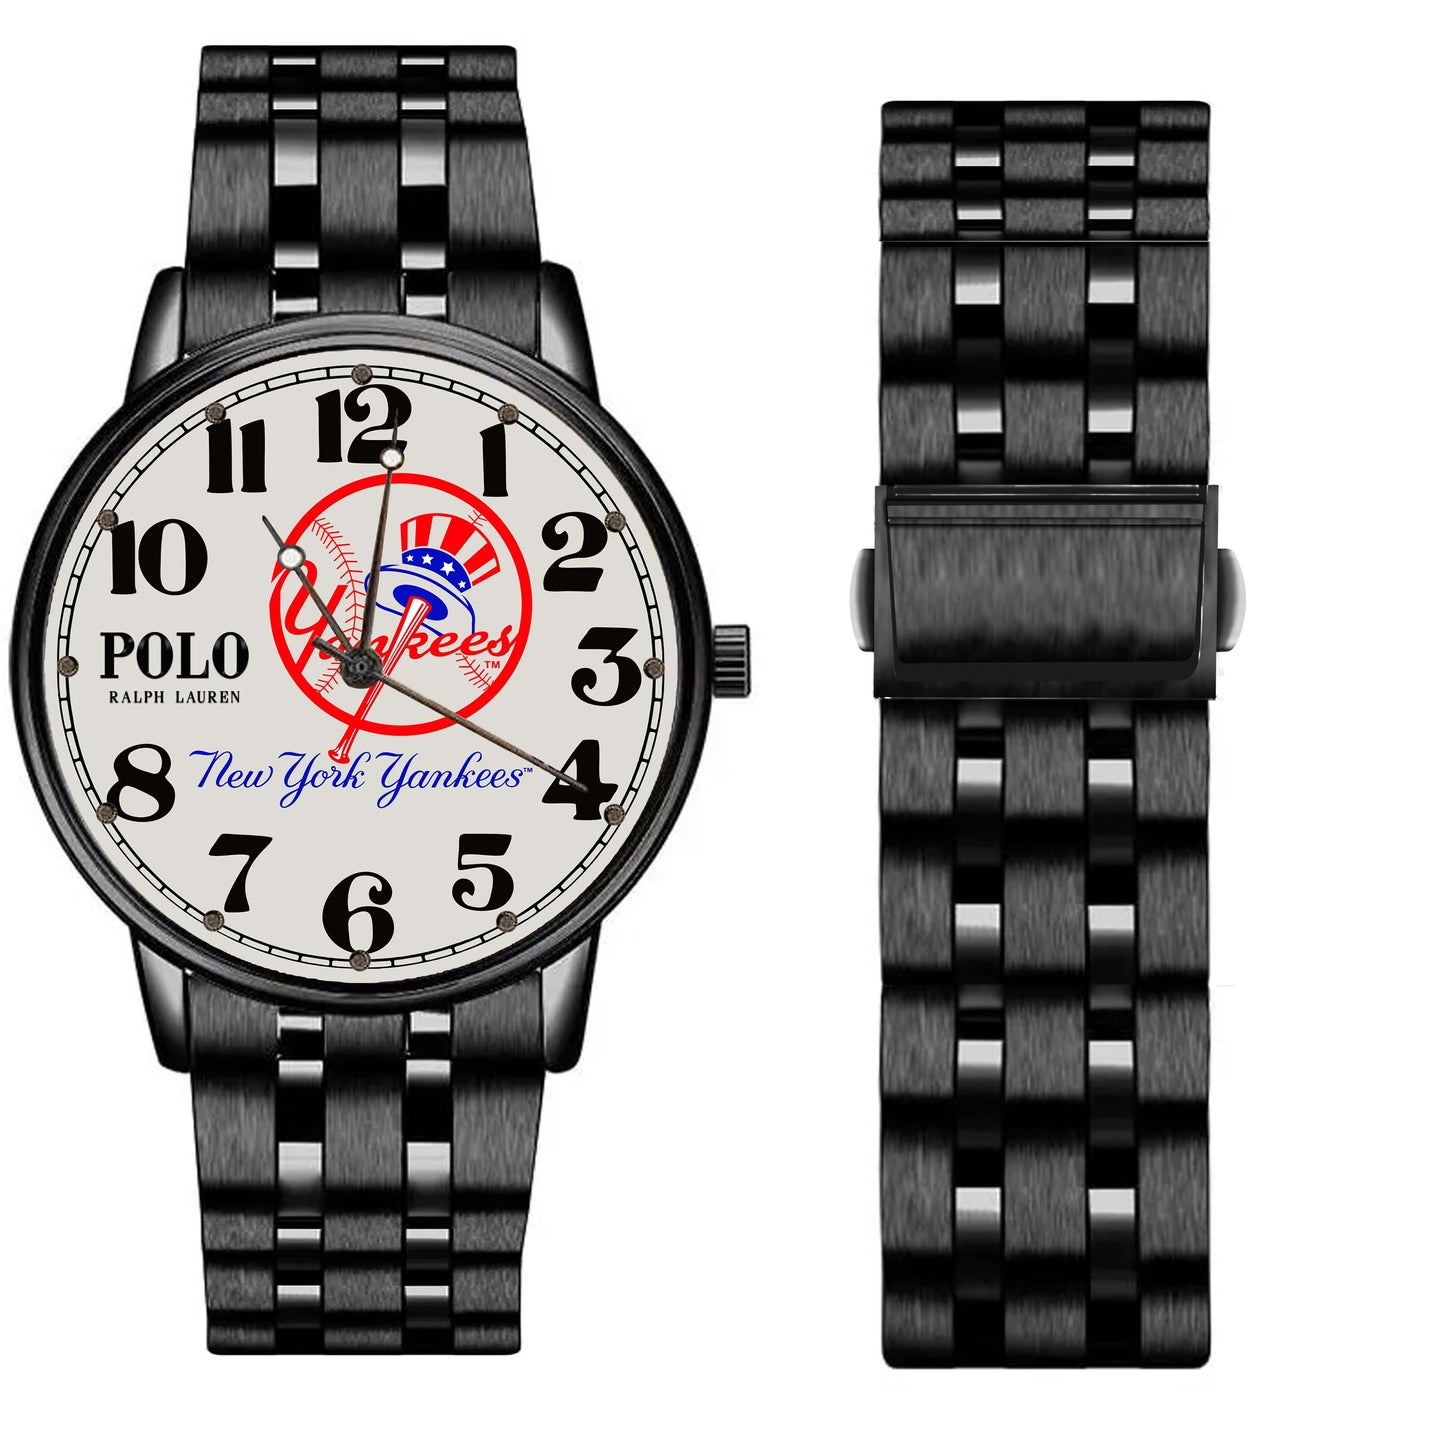 Polo Ralph Lauren New York Yankees Sport Metal Watch Nm29.8